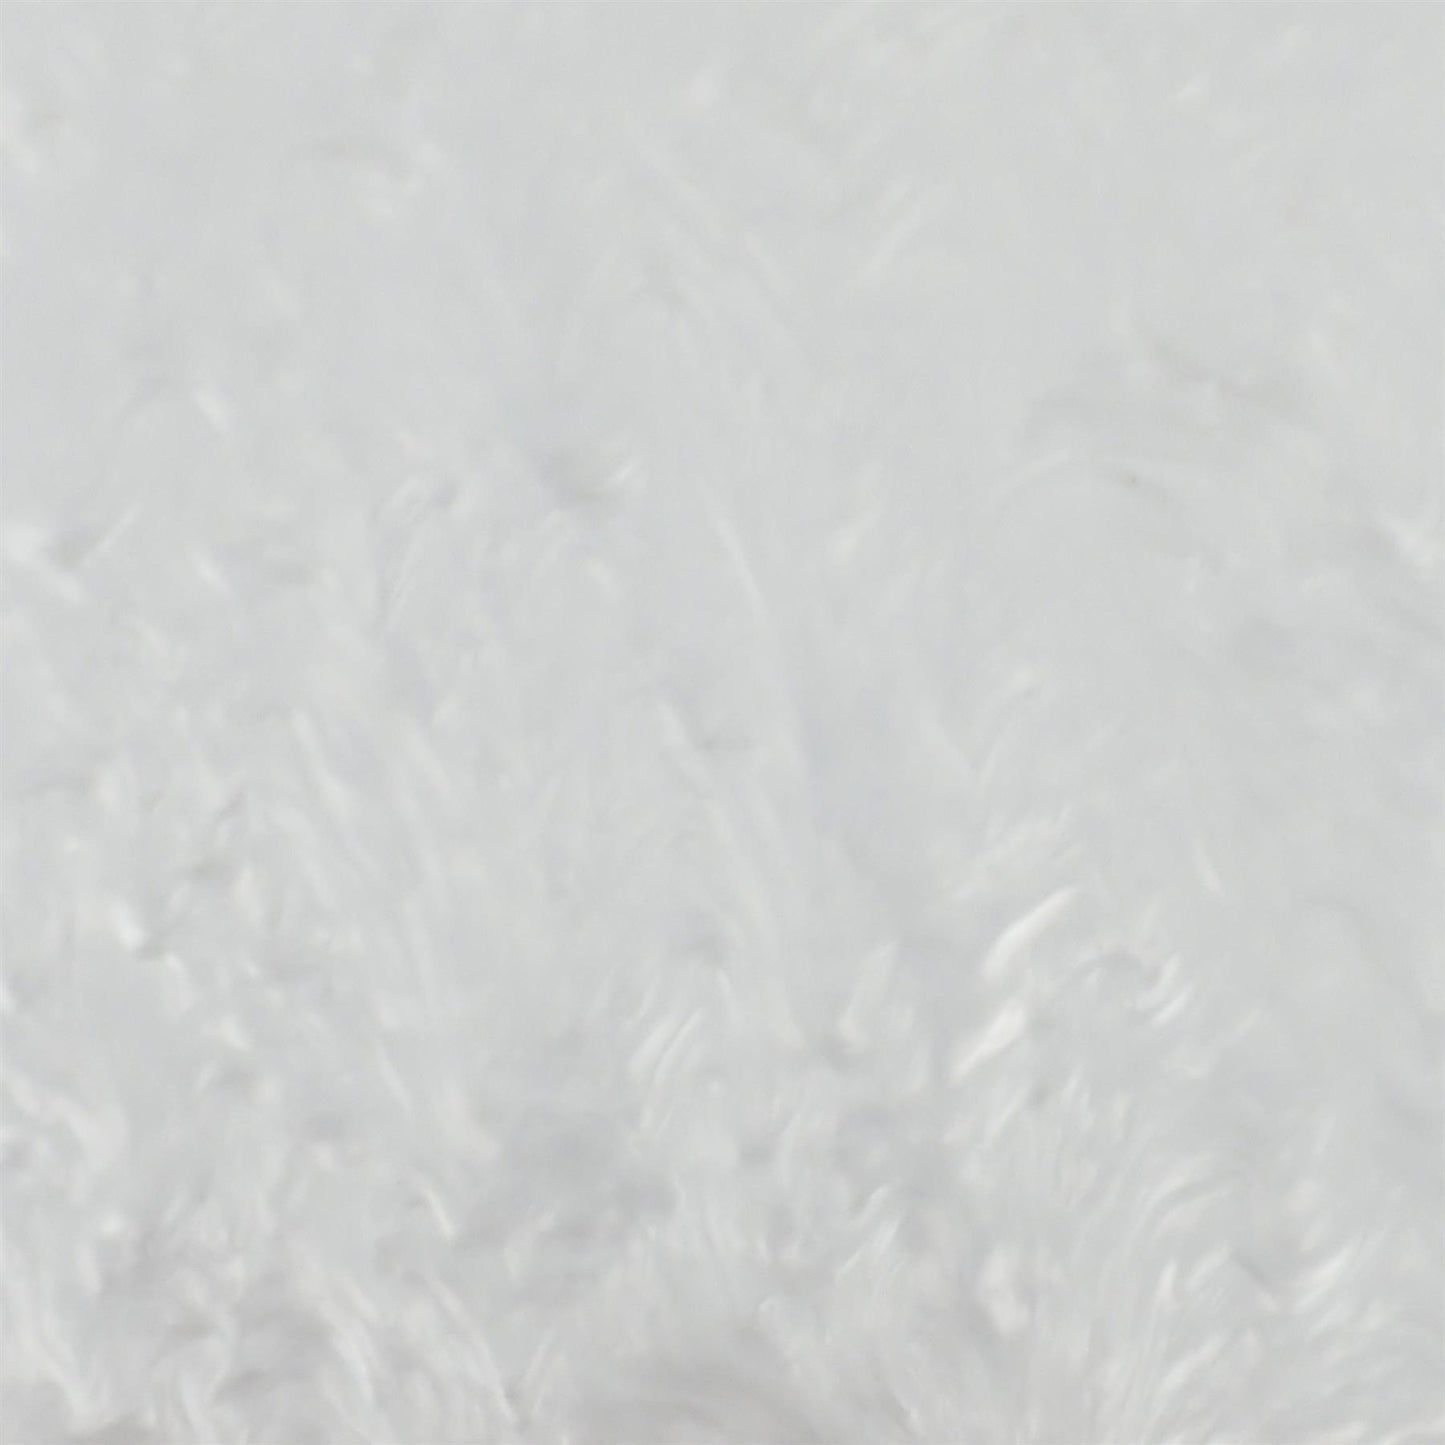 Incudo White Pearl Acrylic Sheet - 600x500x3mm